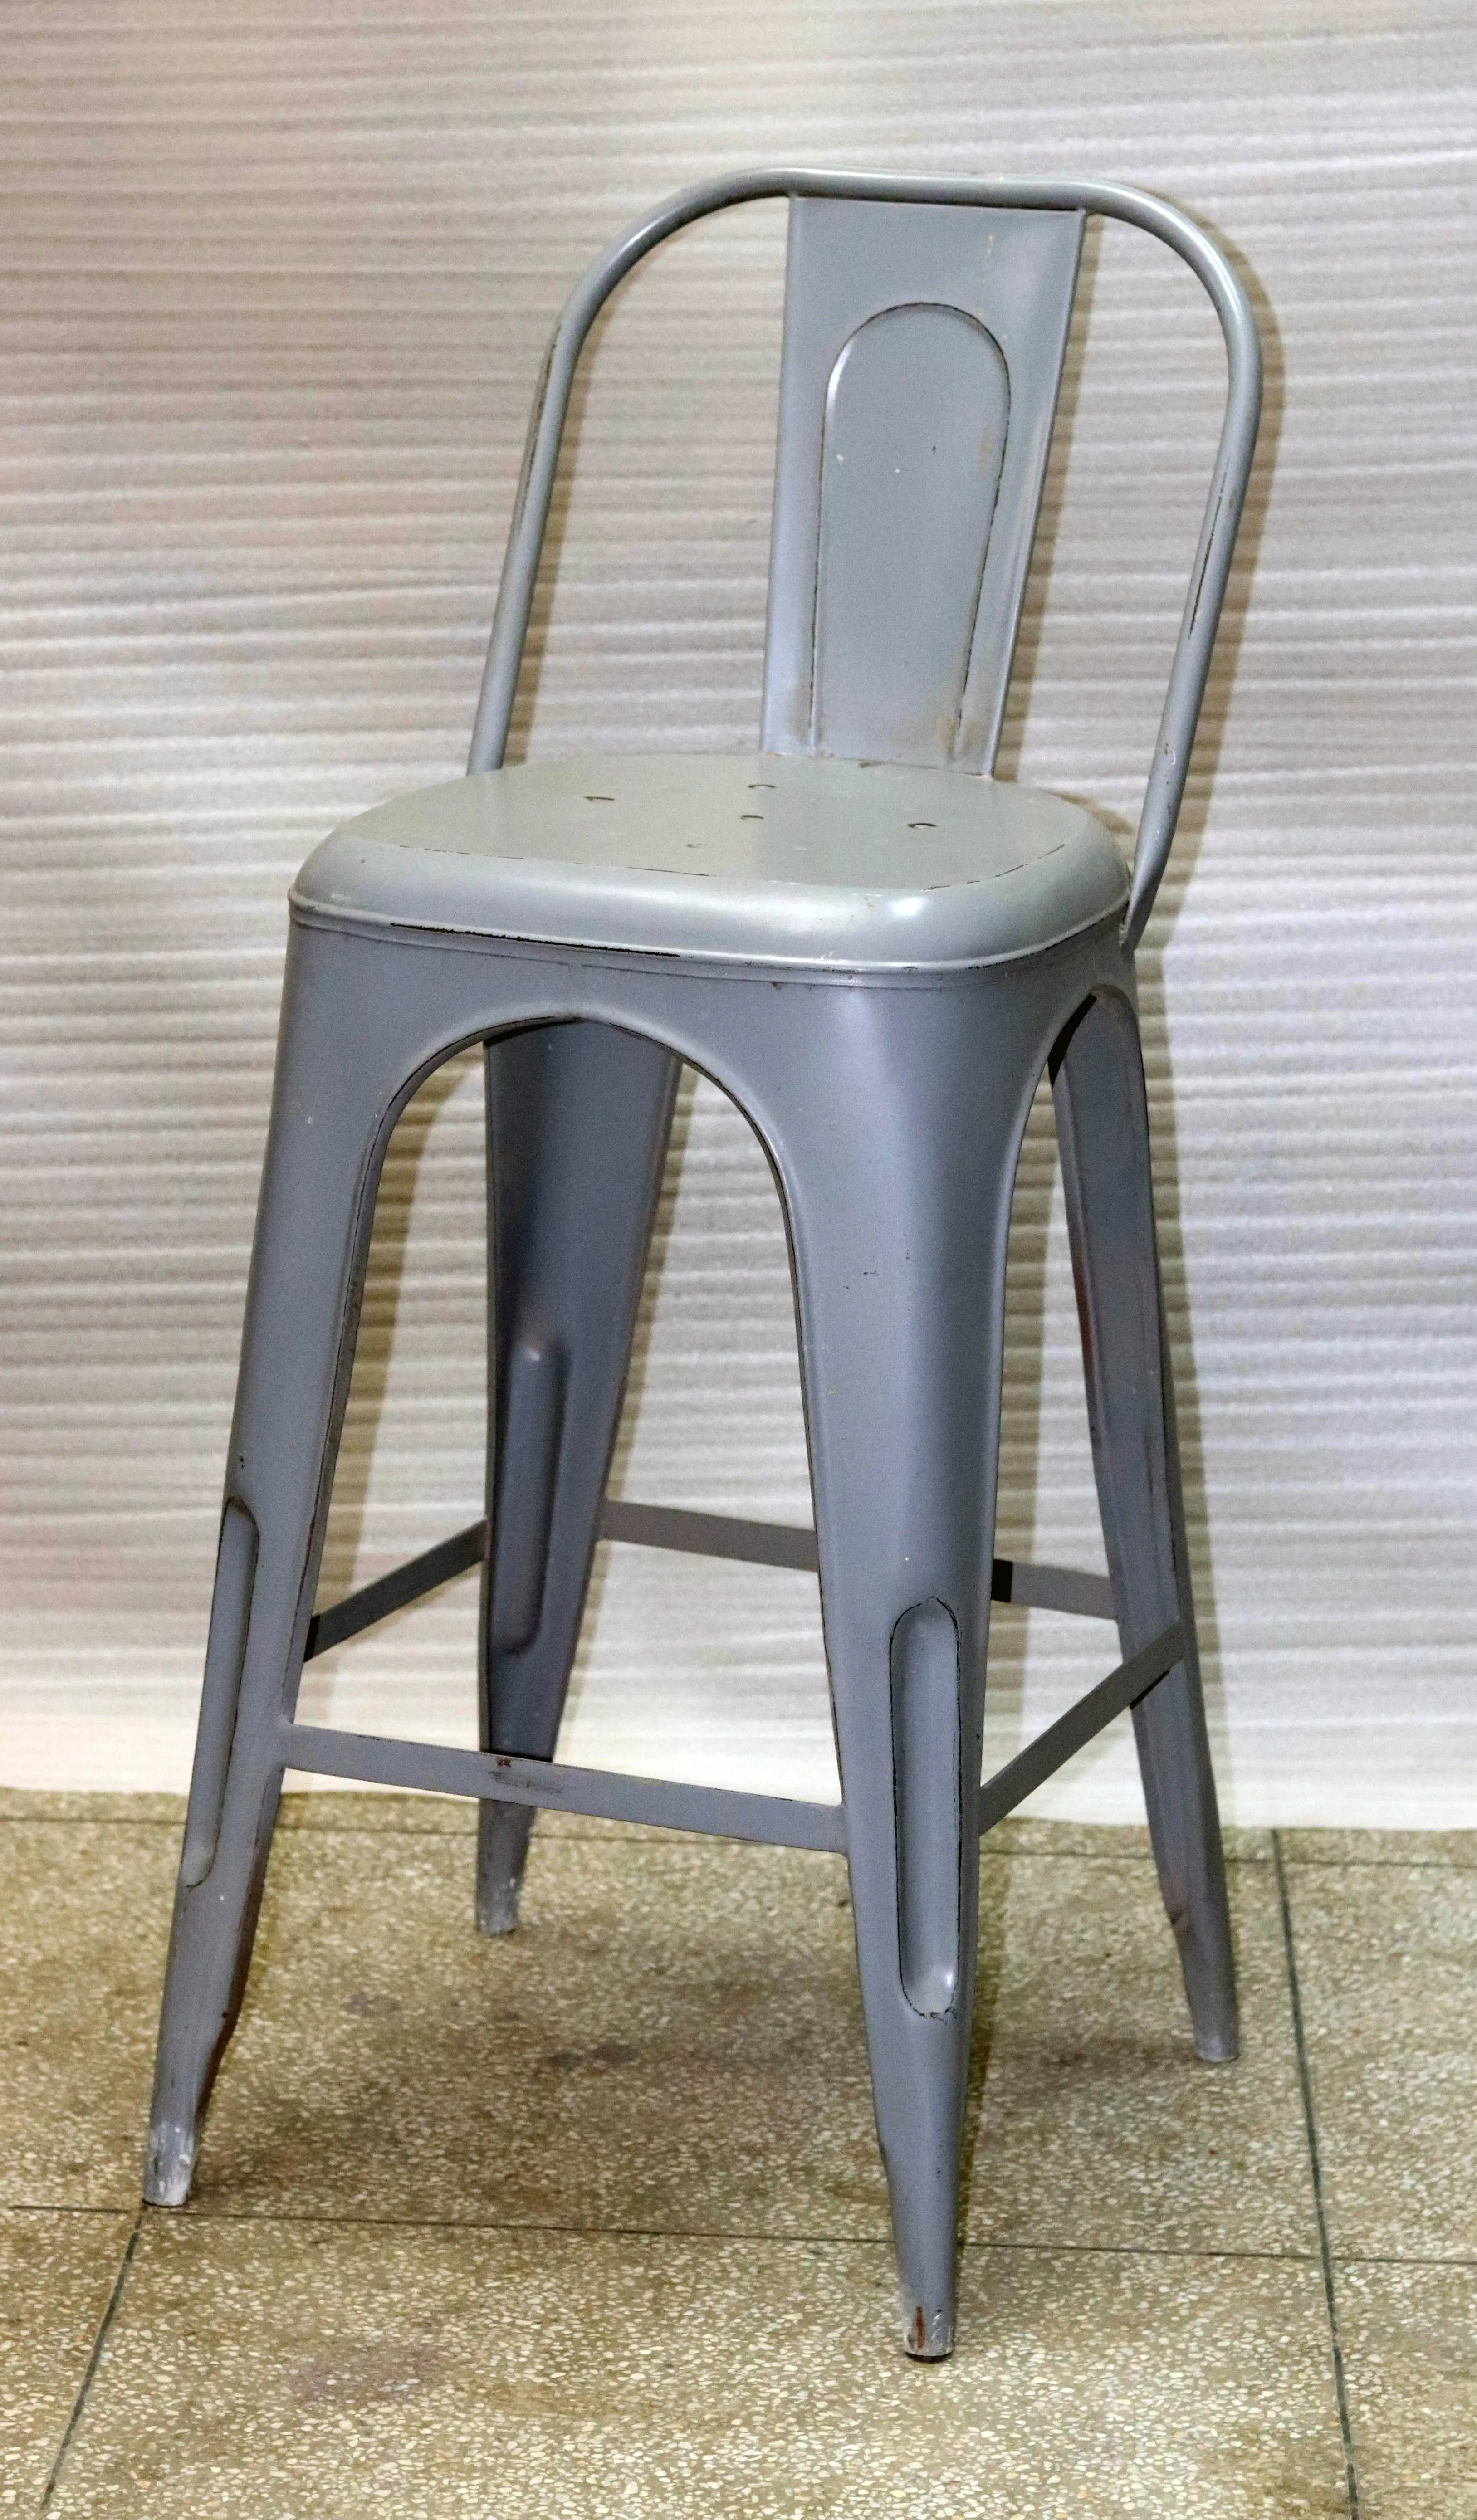 Iron Cello Bar Chair - popular handicrafts